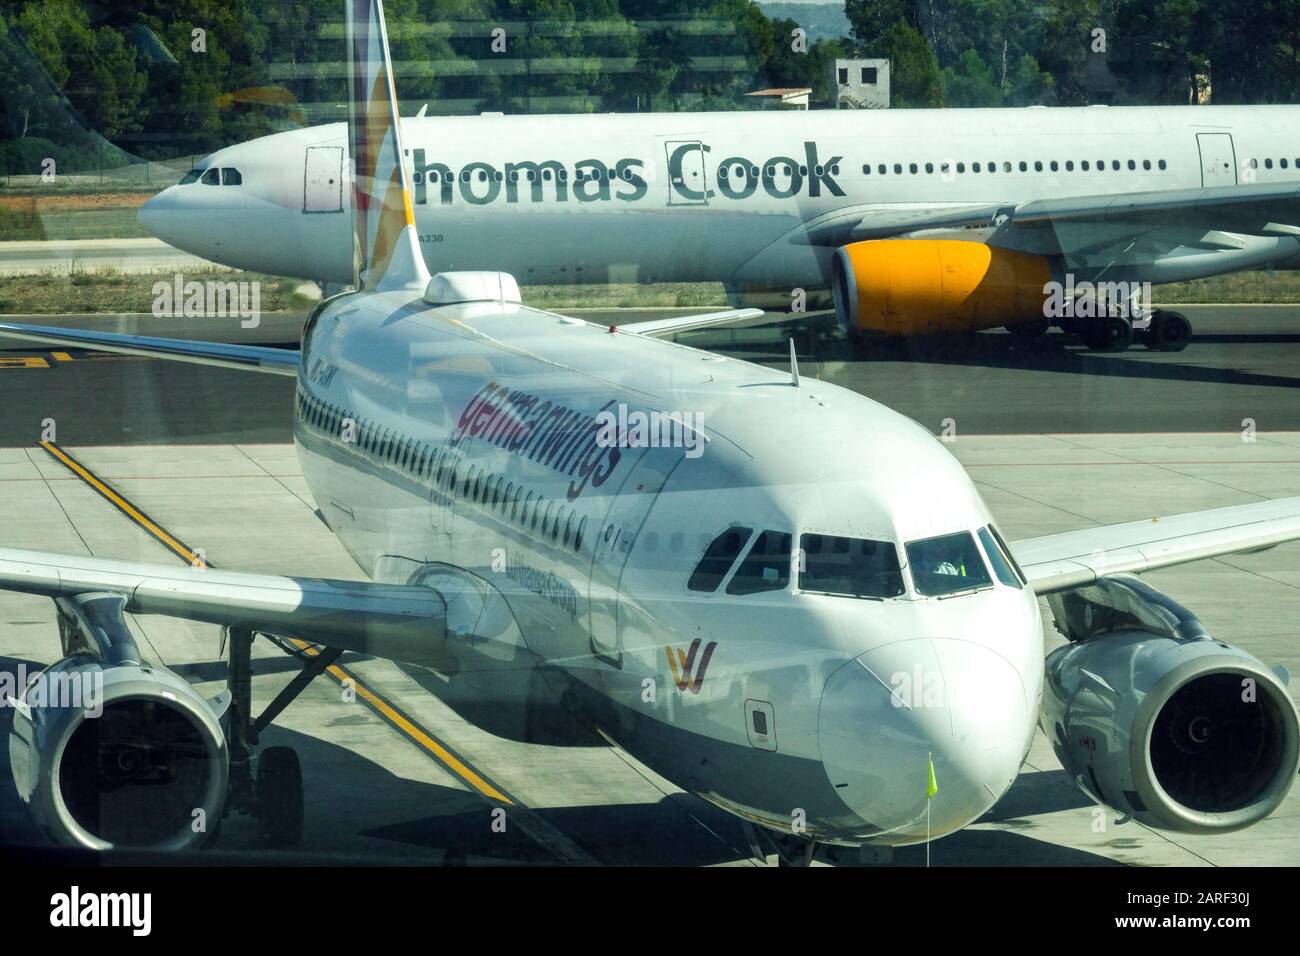 Thomas Cook plane on runway, airport Palma de Mallorca Spain Stock Photo